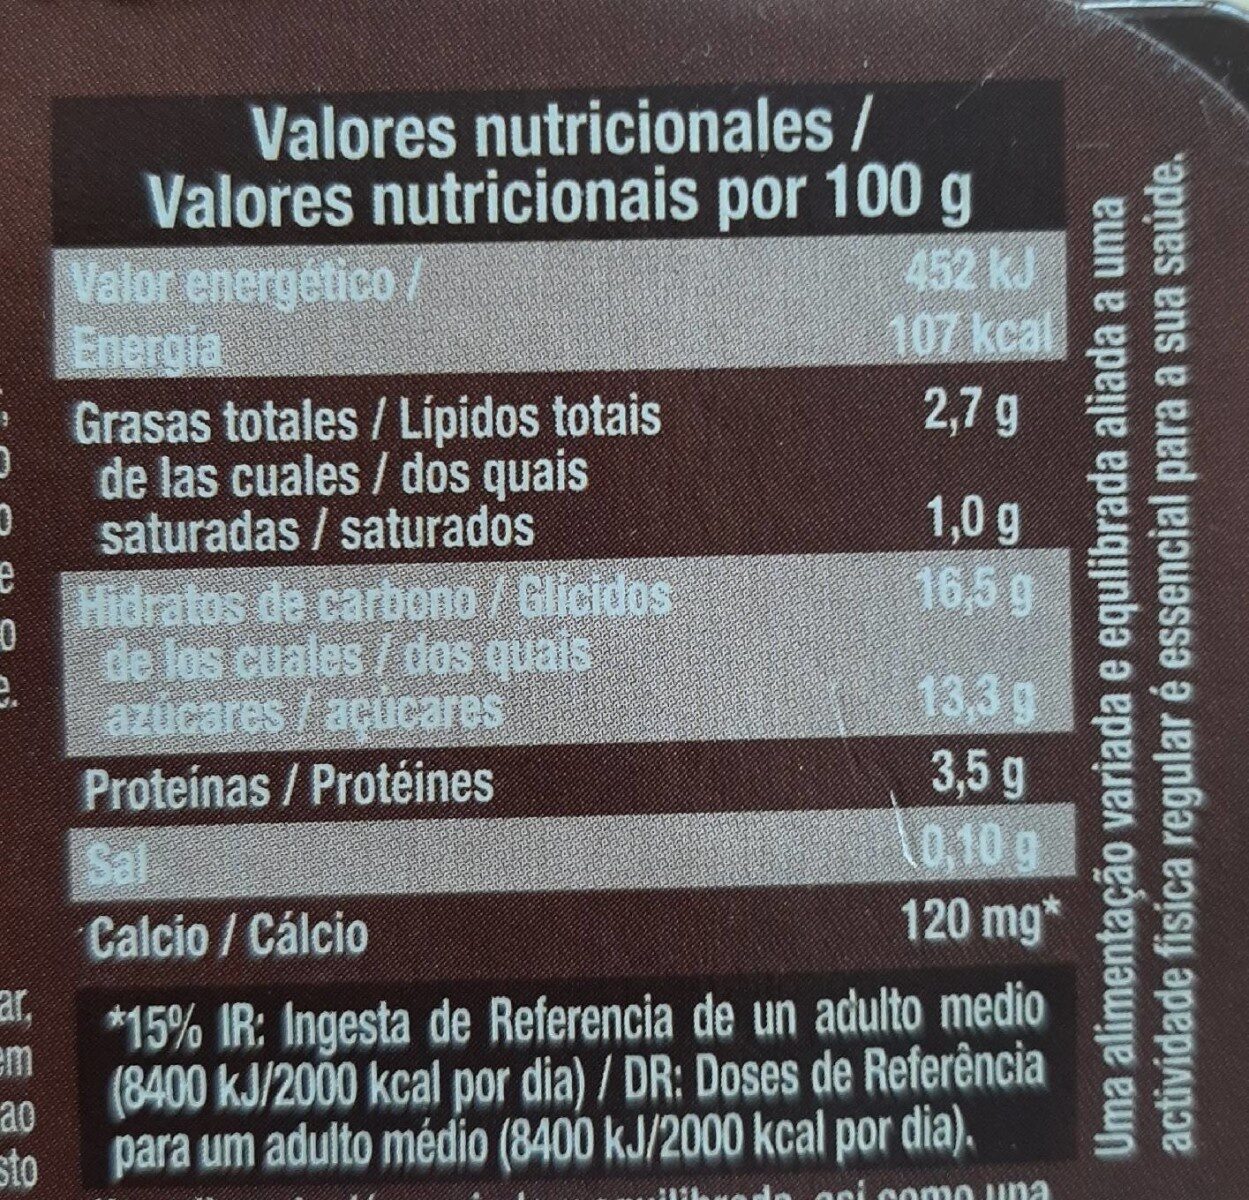 SojaSun POSTRE CHOCOLATE - Informació nutricional - es